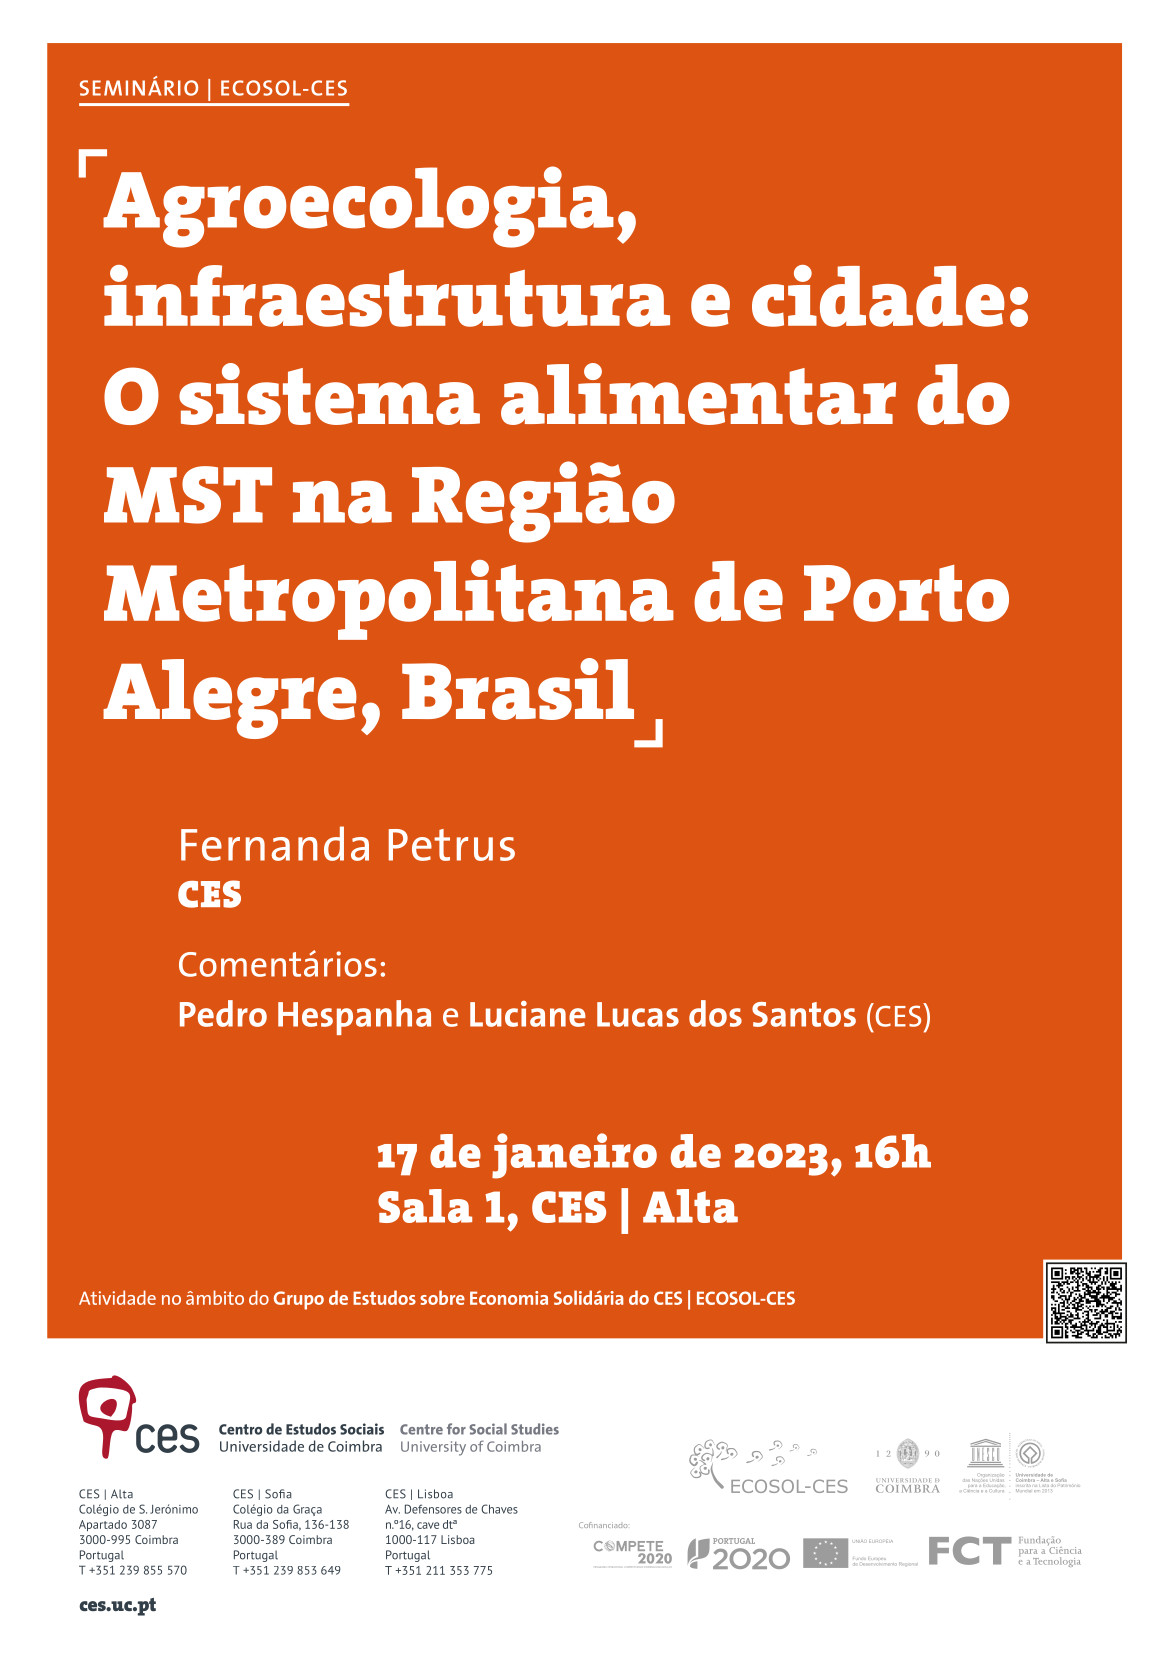 Agroecologia, infraestrutura e cidade: O sistema alimentar do MST na Região Metropolitana de Porto Alegre, Brasil<span id="edit_41520"><script>$(function() { $('#edit_41520').load( "/myces/user/editobj.php?tipo=evento&id=41520" ); });</script></span>